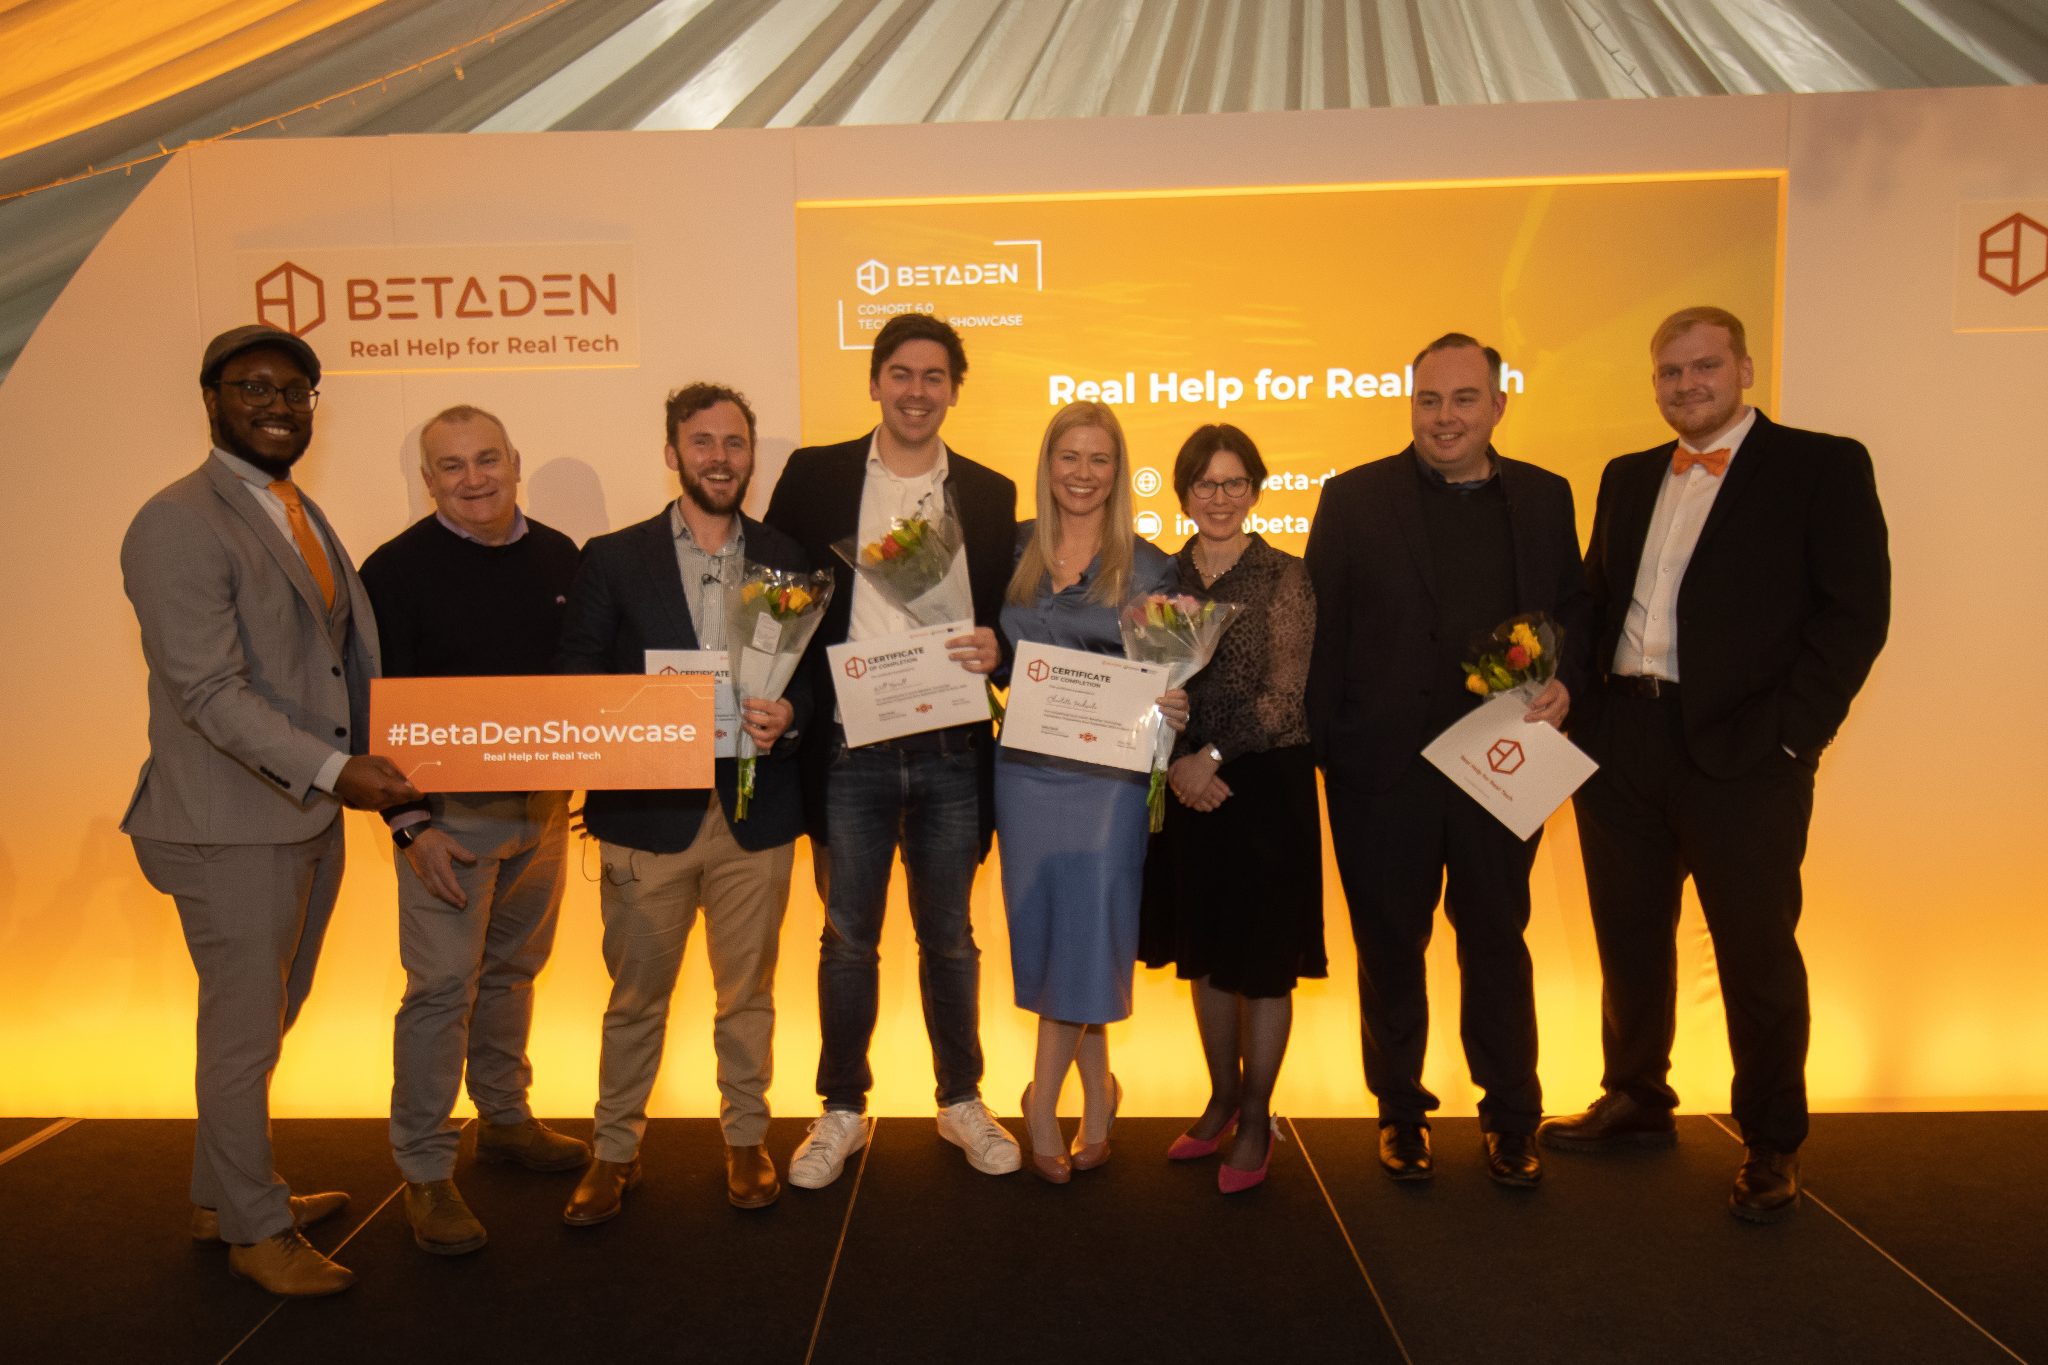 BetaDen showcase: celebrating emerging tech talent